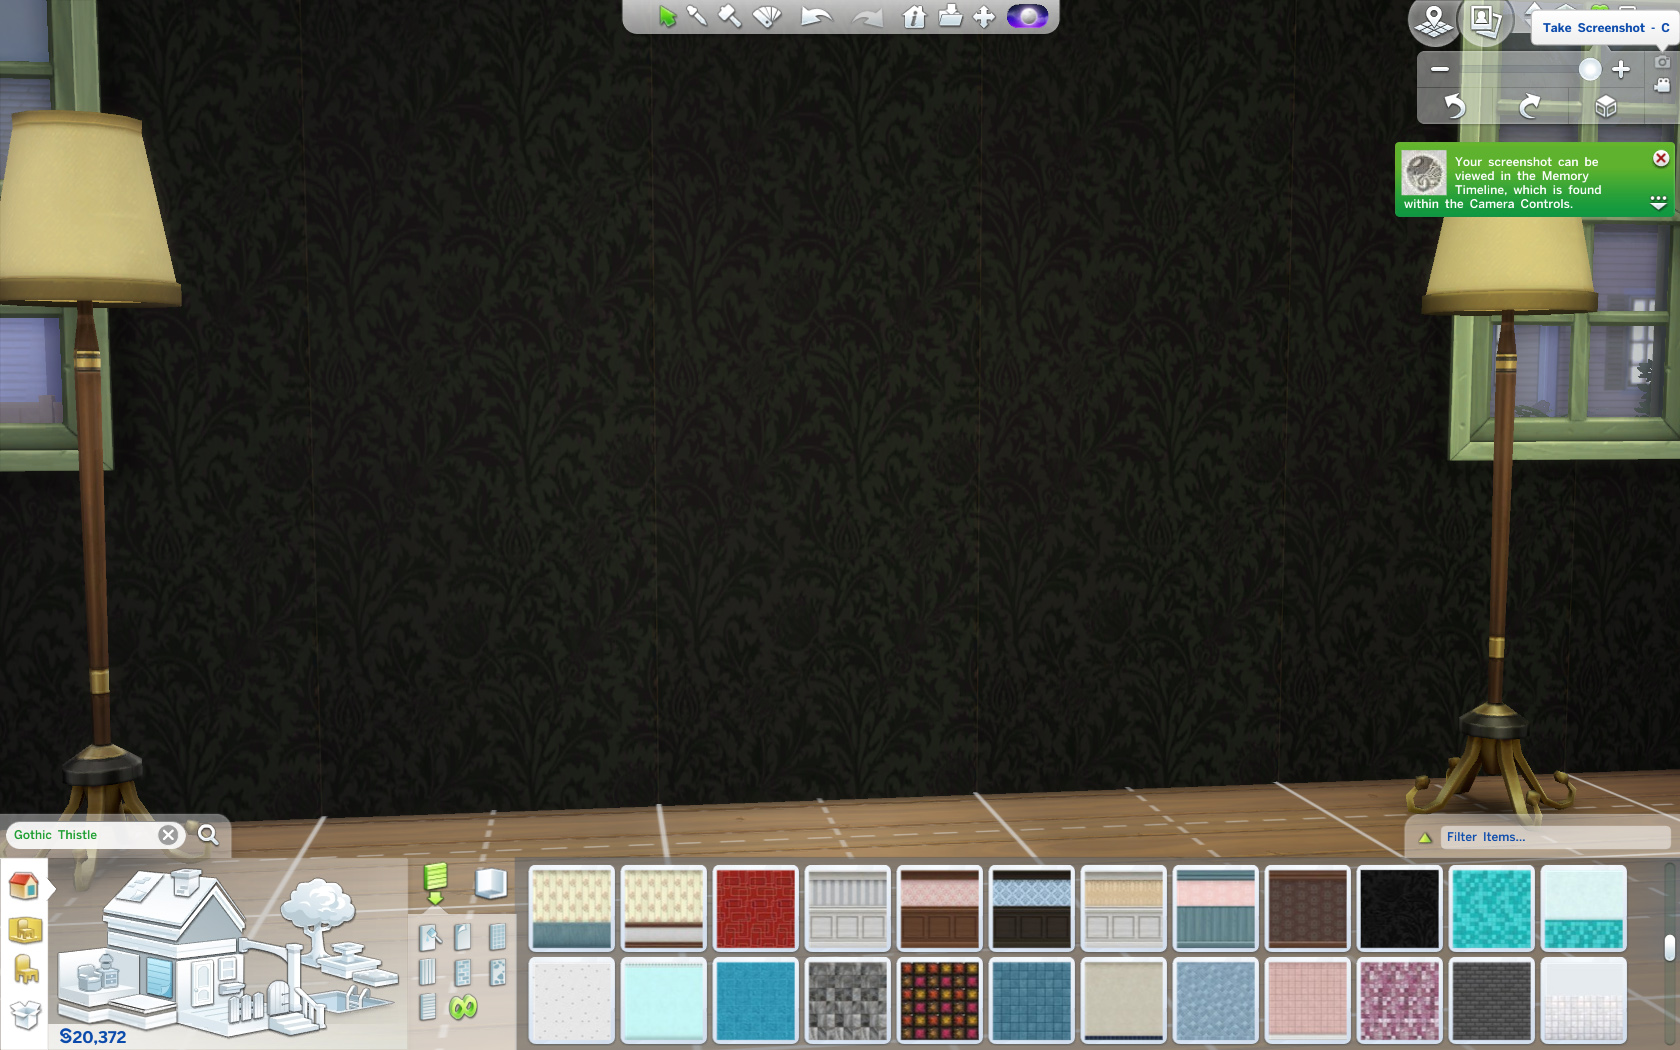 Sims 4 Black Wallpaper Cc - HD Wallpaper 